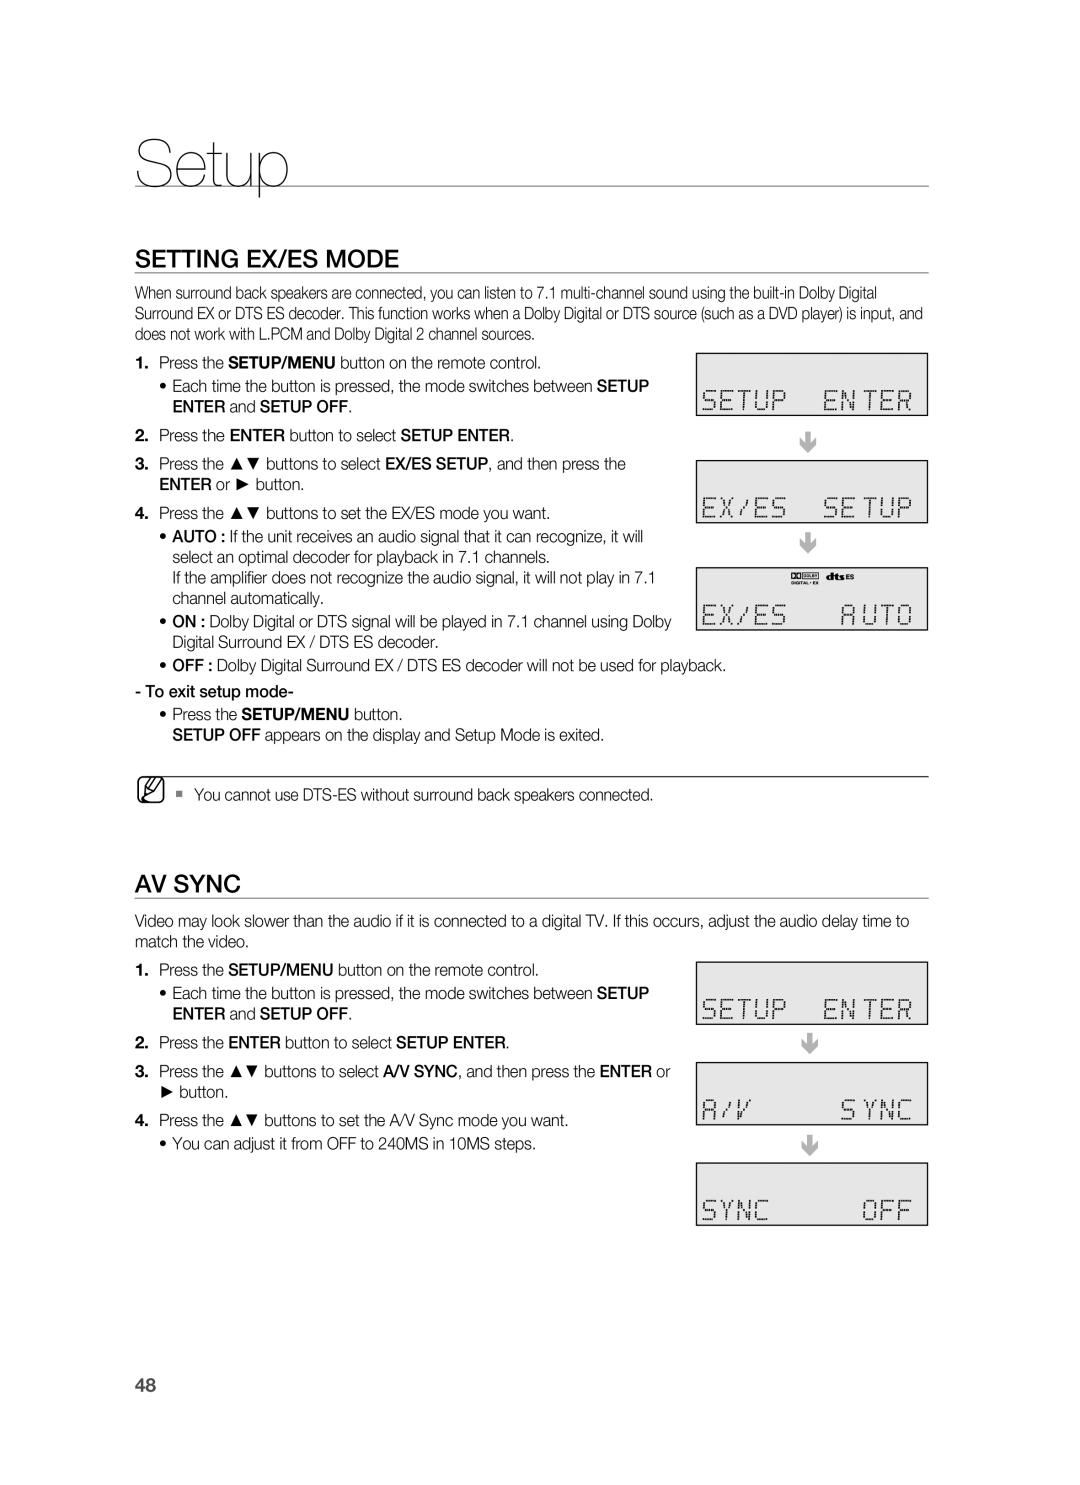 Samsung HW-C900-XAA user manual Setup, Setting Ex/Es Mode, Av Sync 